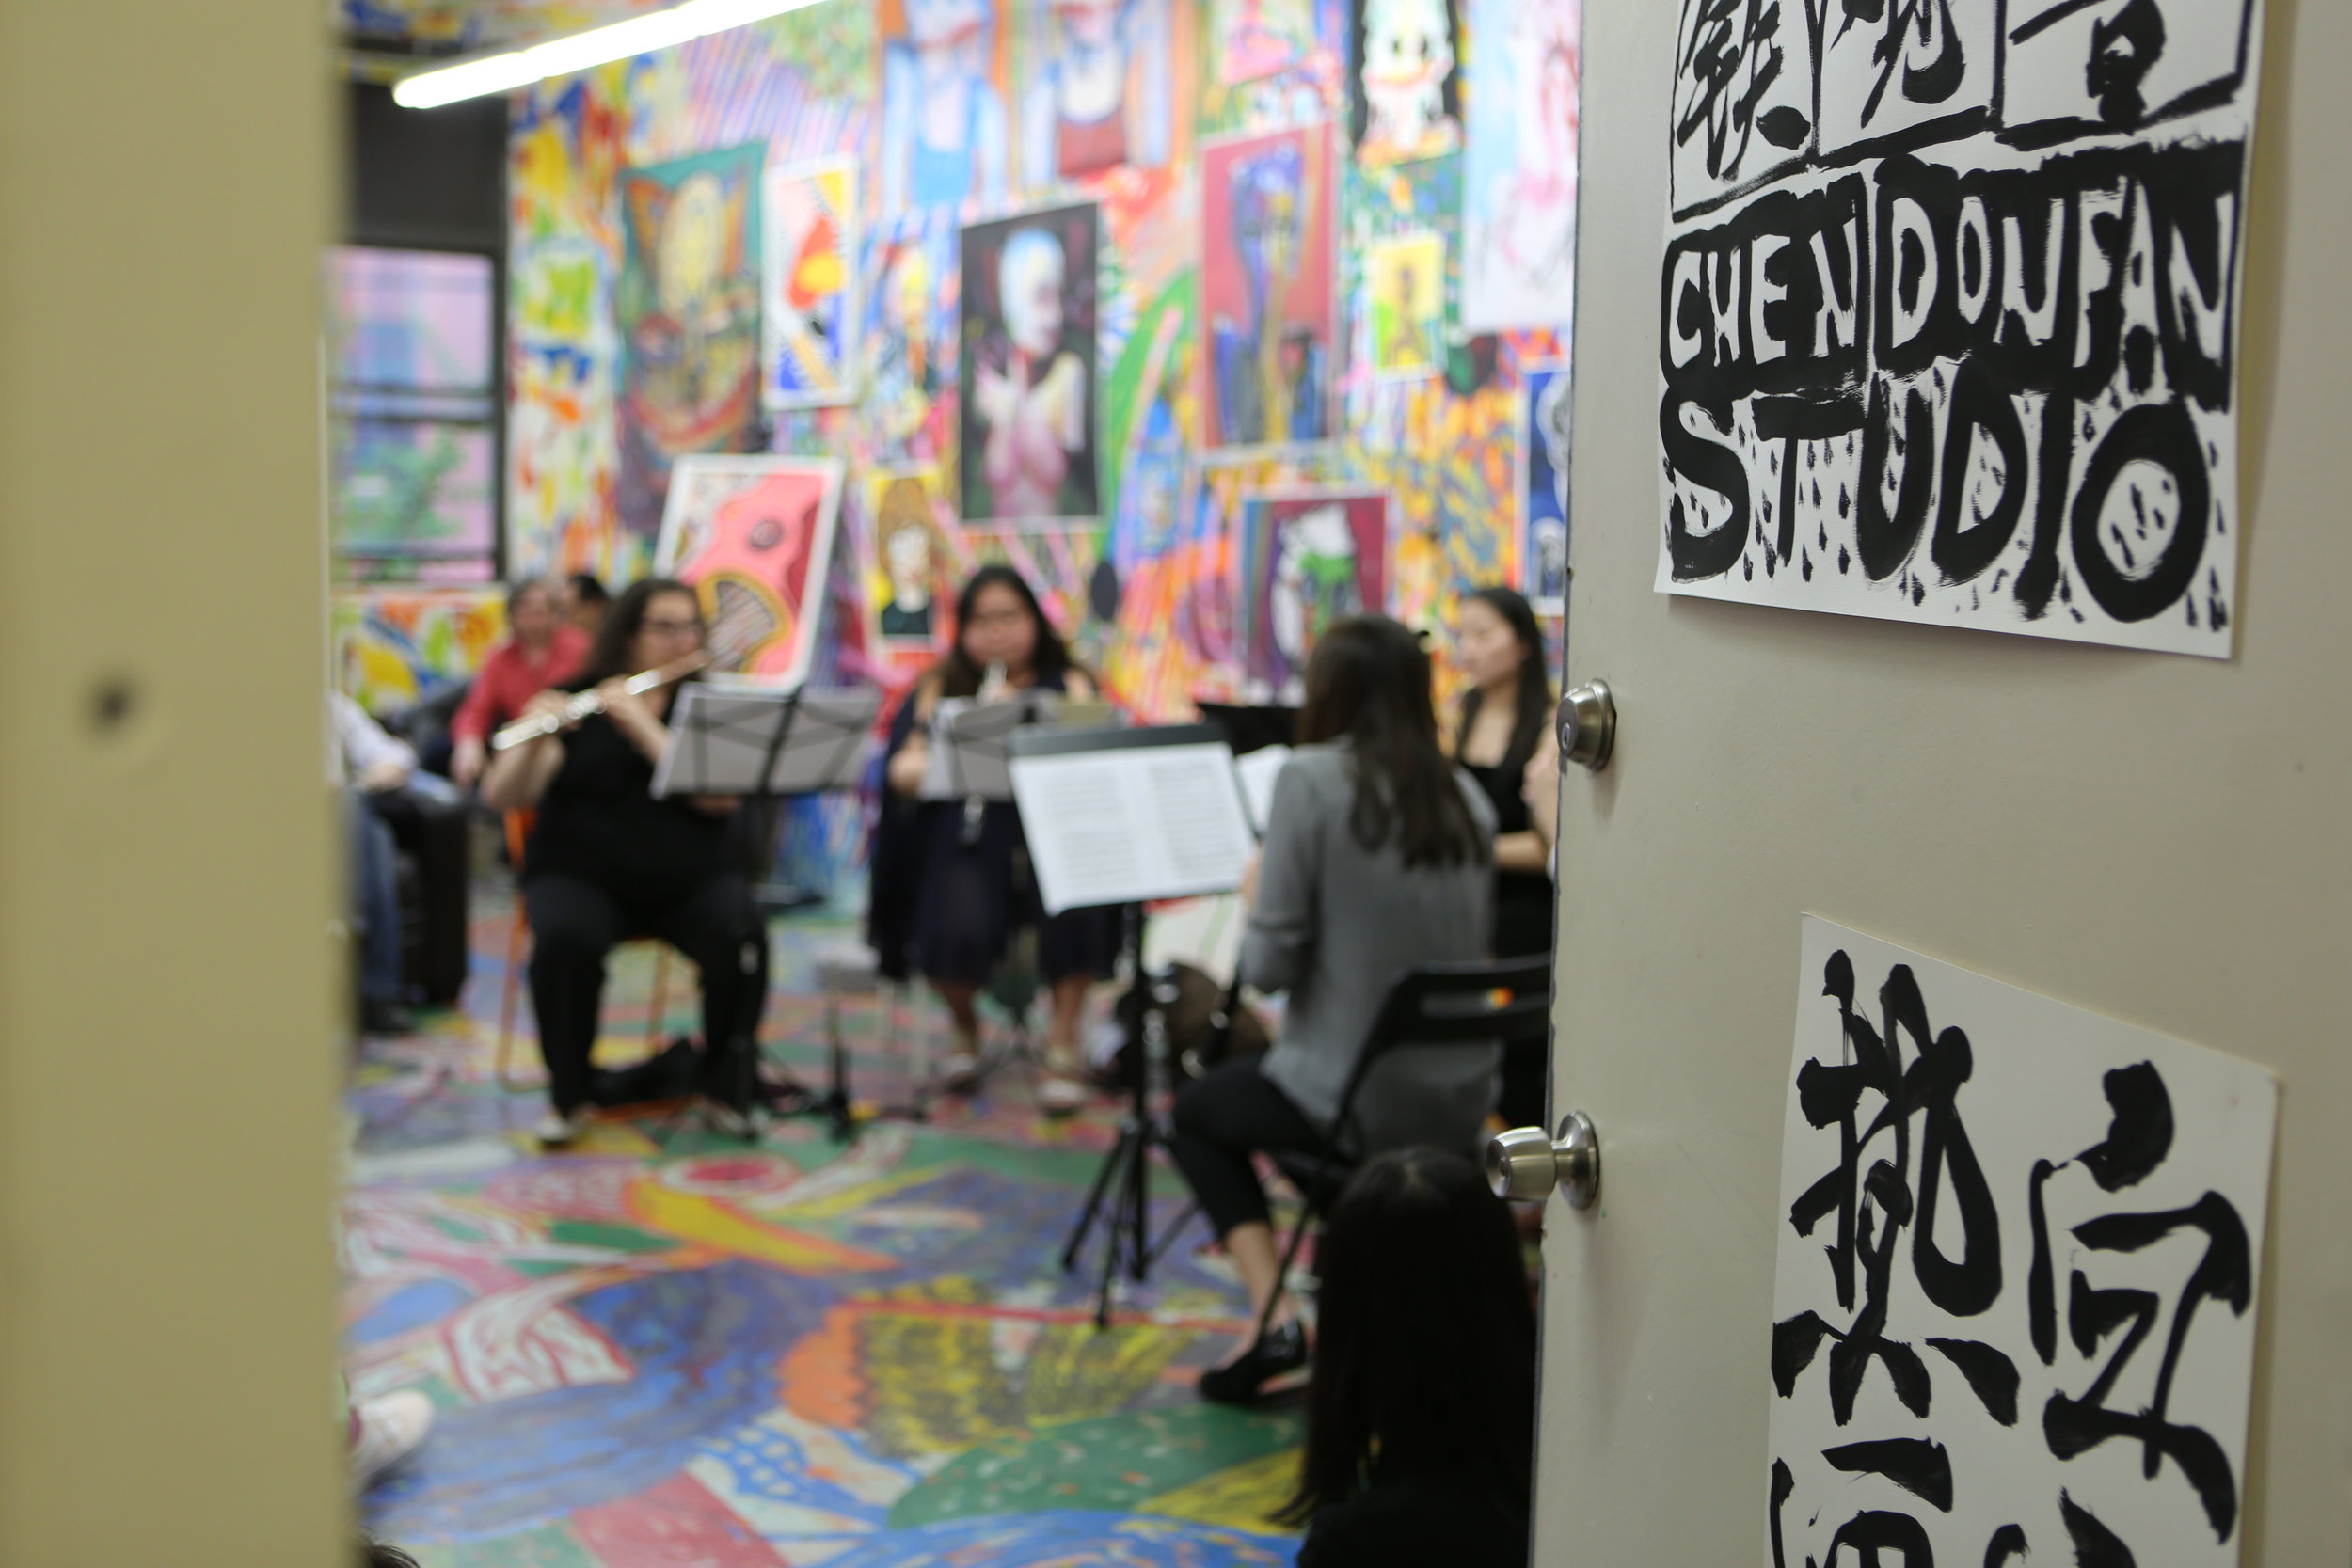   Nevermore - Music Concert  with The Lumisade Quintet at Chen Dongfan Studio. Photograph by Inna Xu.  昨夜星辰昨夜风 - 木管五重奏音乐会@陈栋帆工作室，摄影：徐益英. 